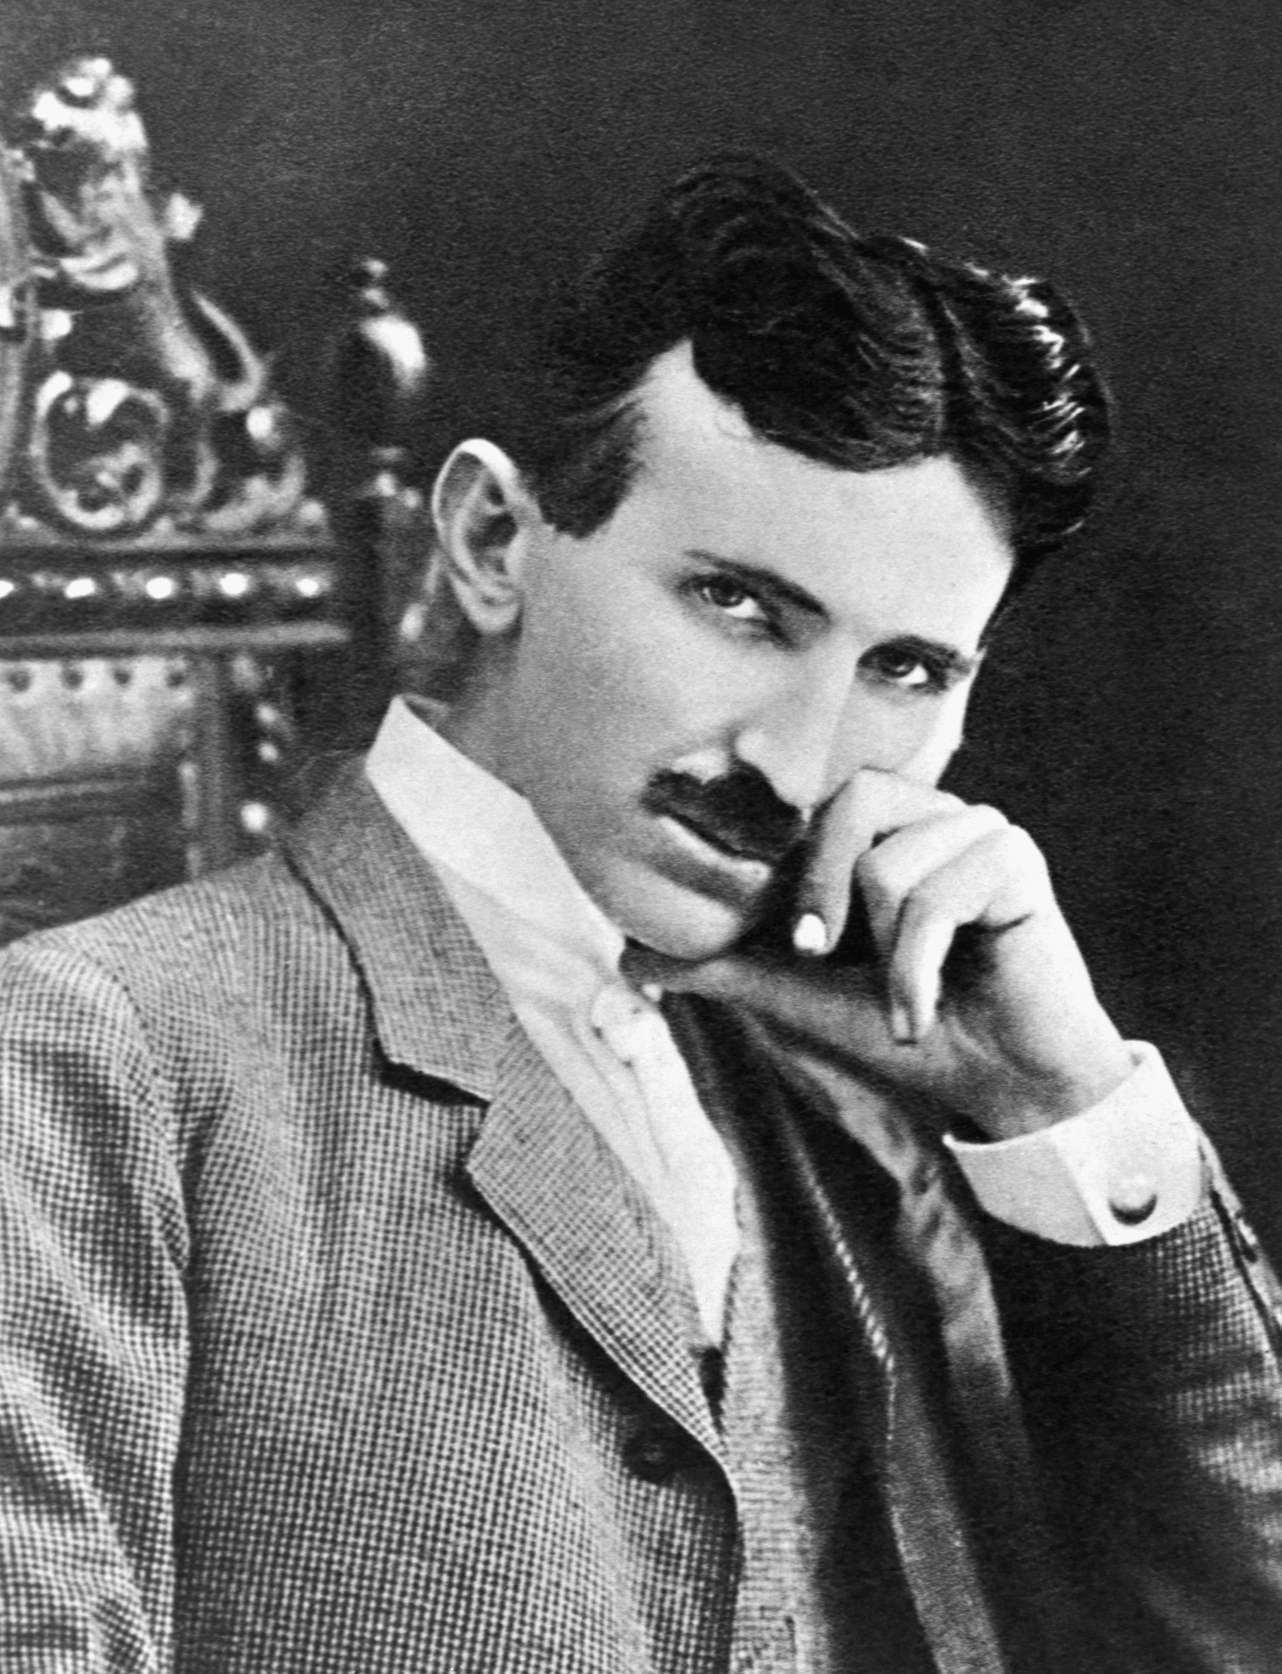 Nikola Tesla Wallpaper HD (67+ images)